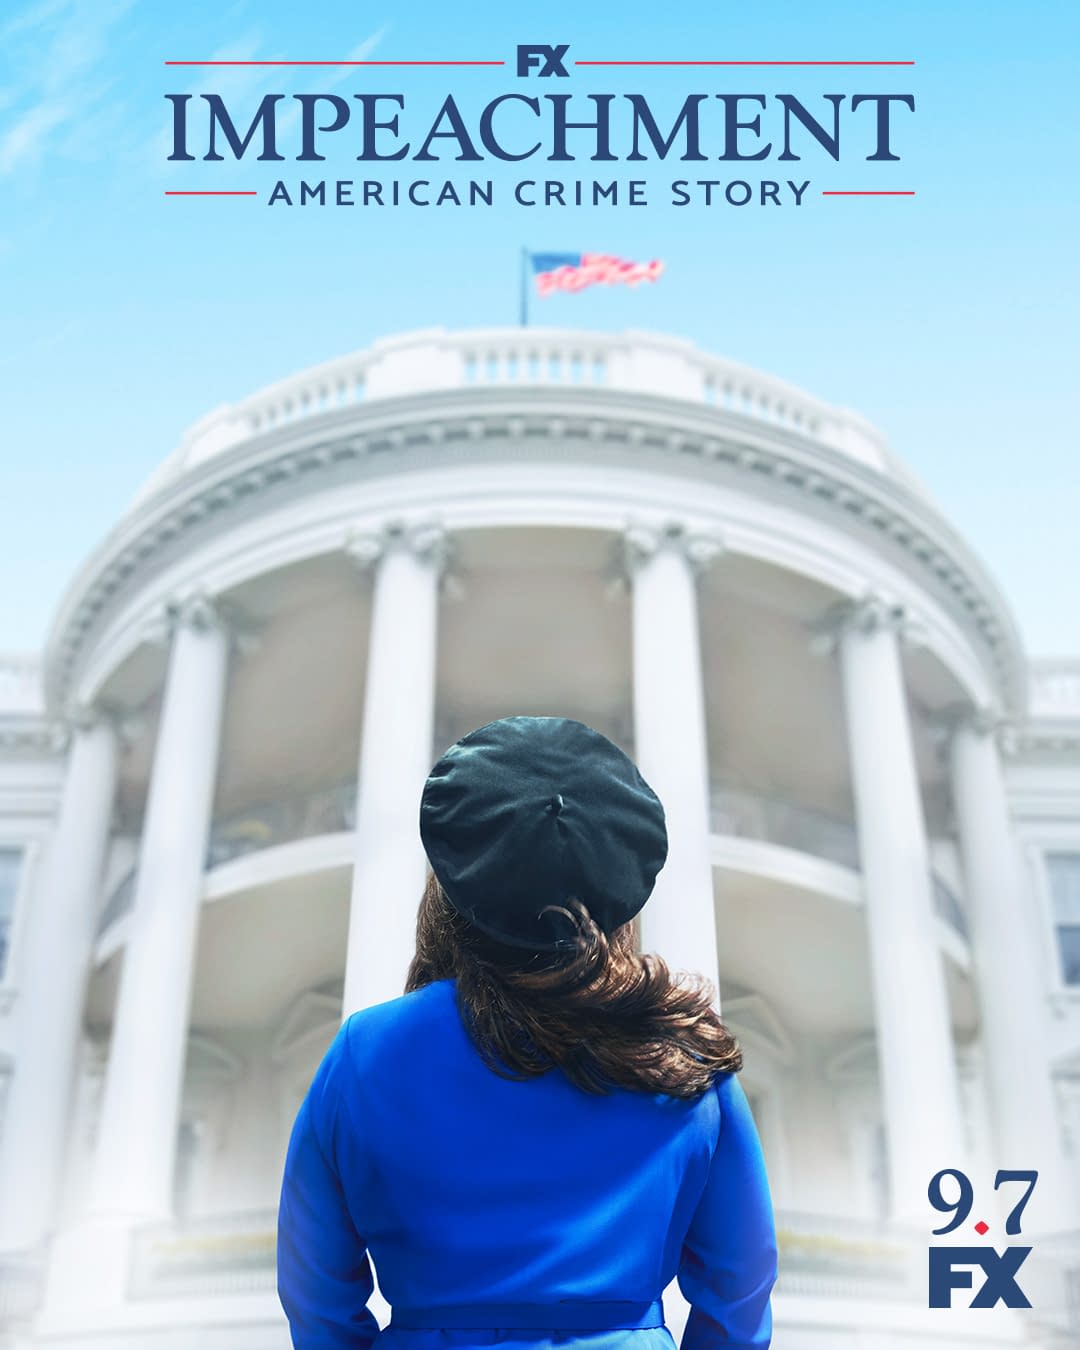 Impeachment: American Crime Story: FX Shares Season 3 Key Art Poster